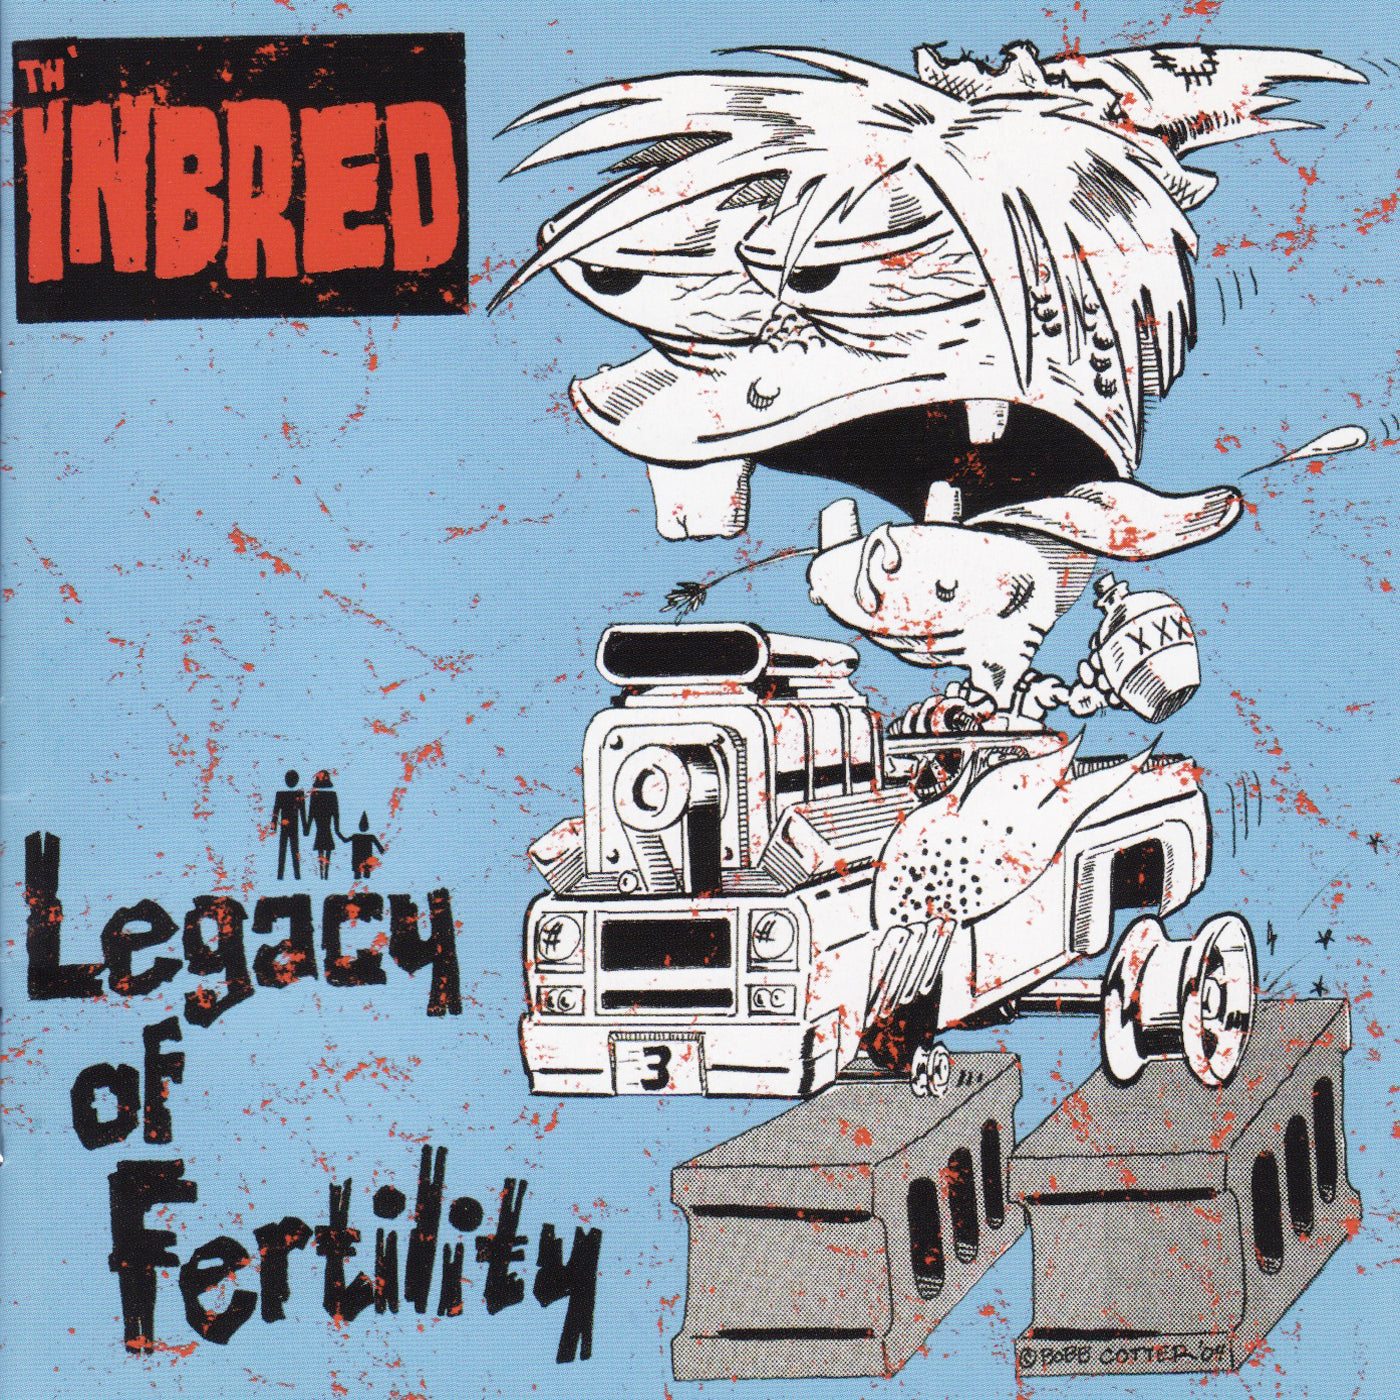 v399 - Th'Inbred - "Legacy Of Fertility"